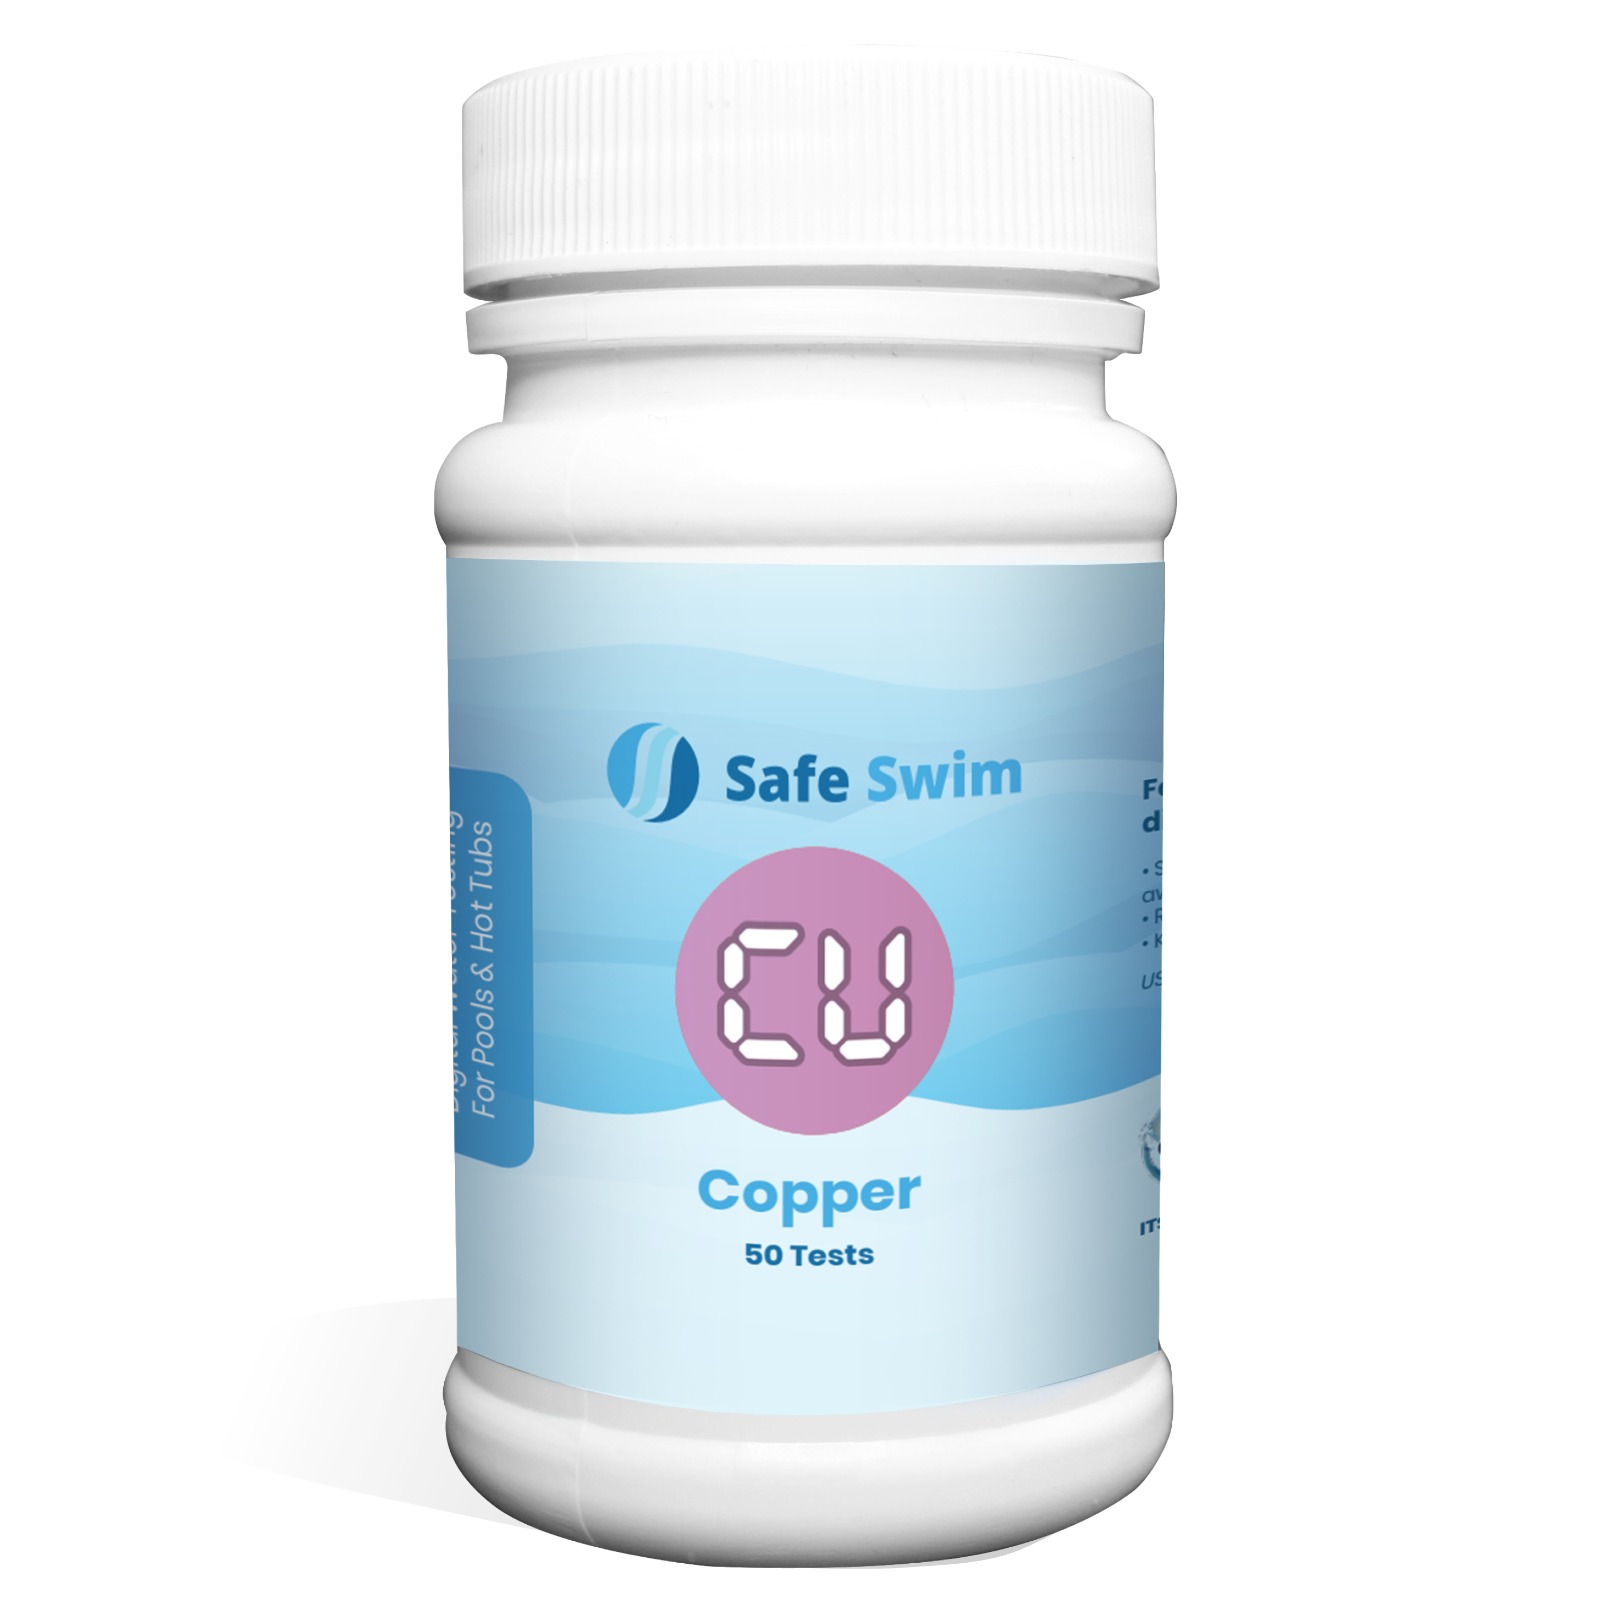 SafeSwim Copper test strips